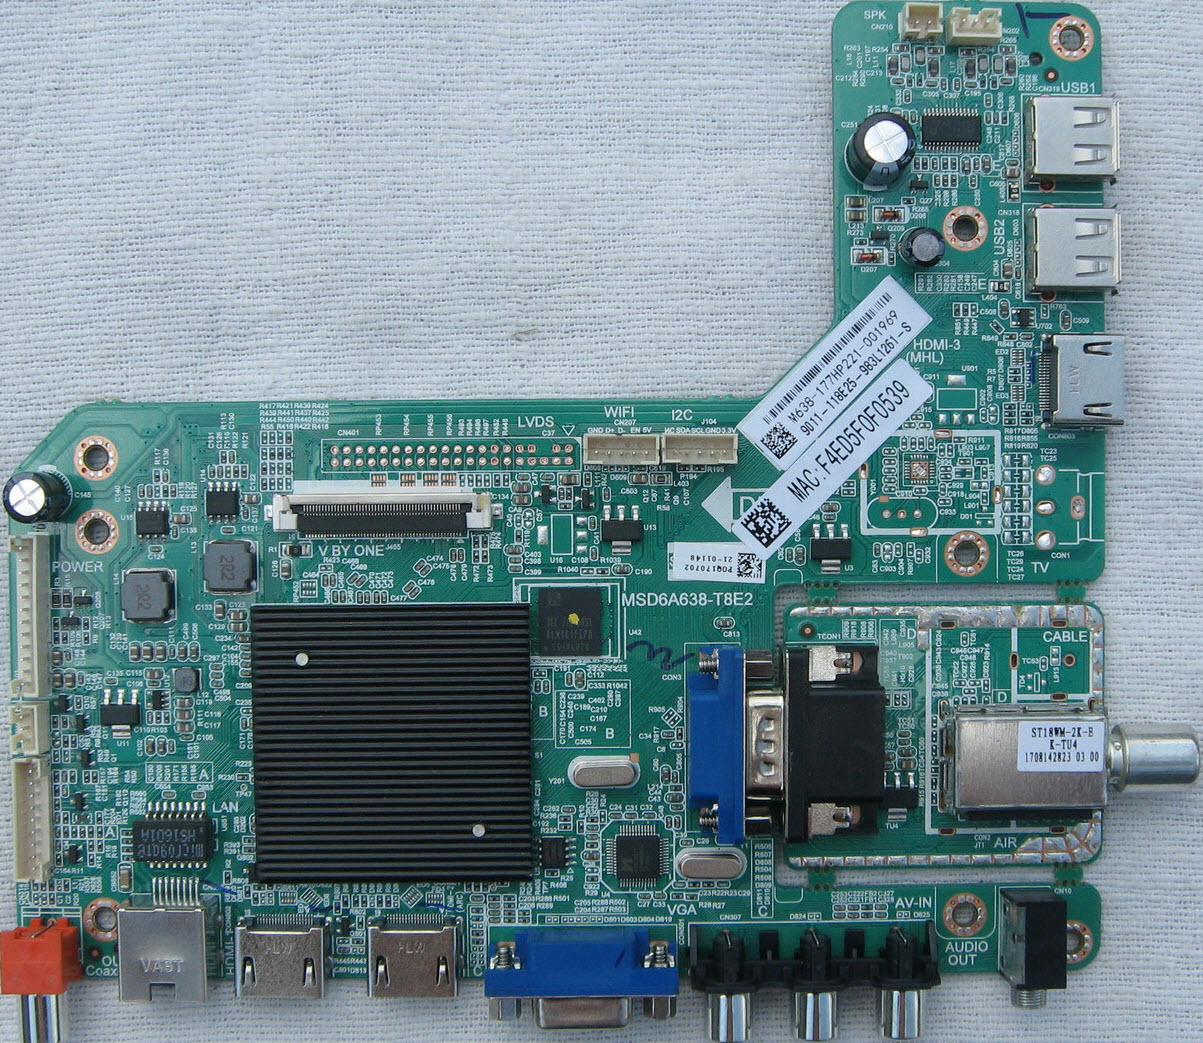 Msd6A638-T8E2_Software